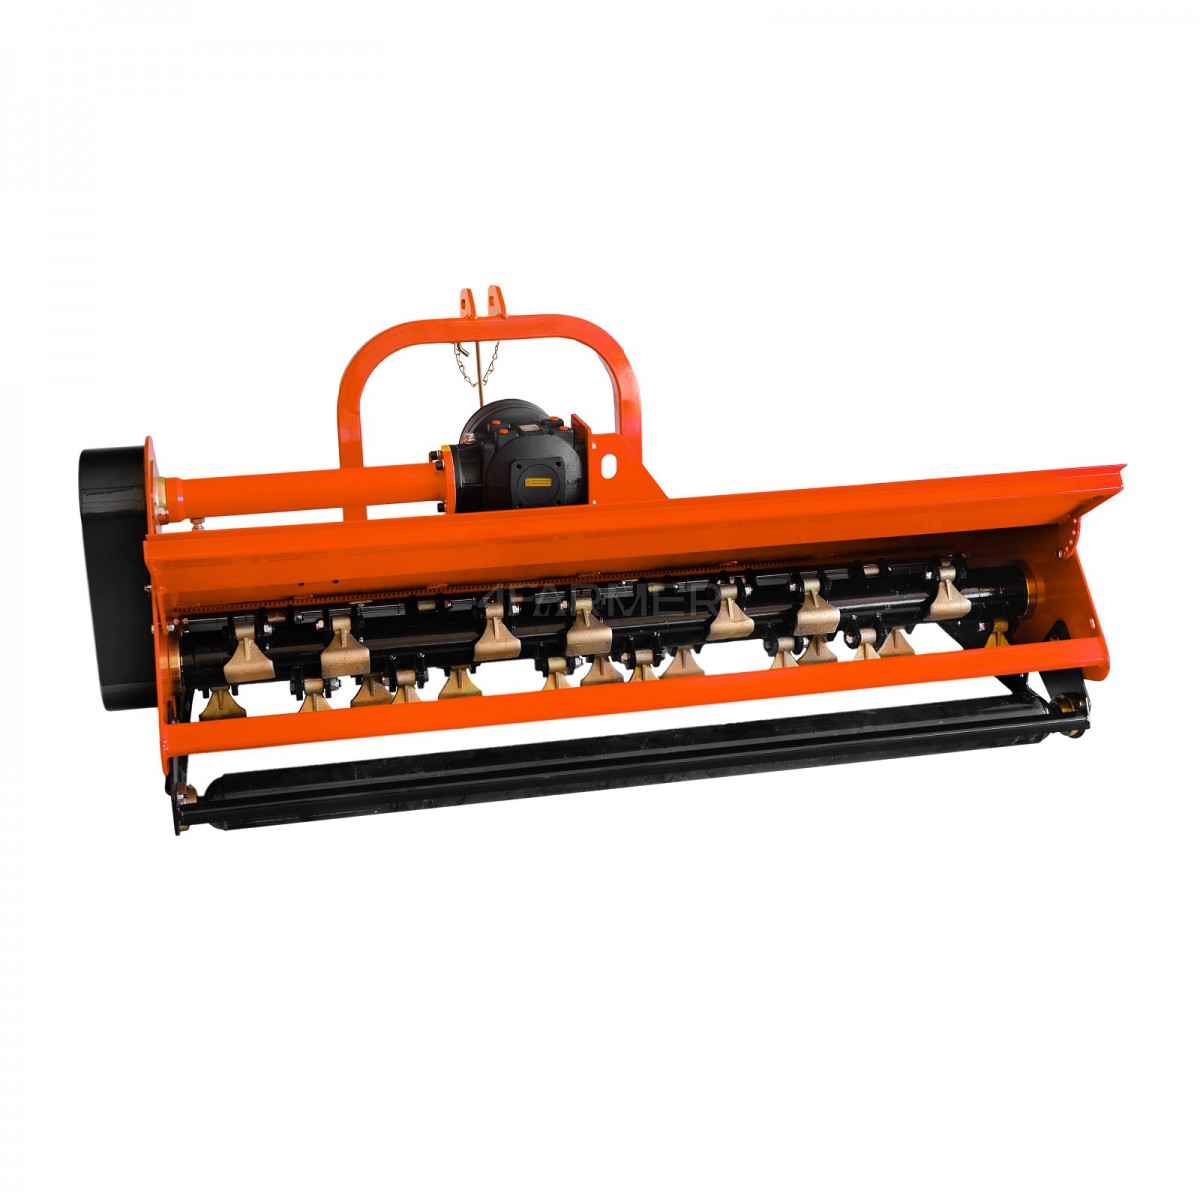 Flail mower EFGC-K 165, opening 4FARMER hatch - orange